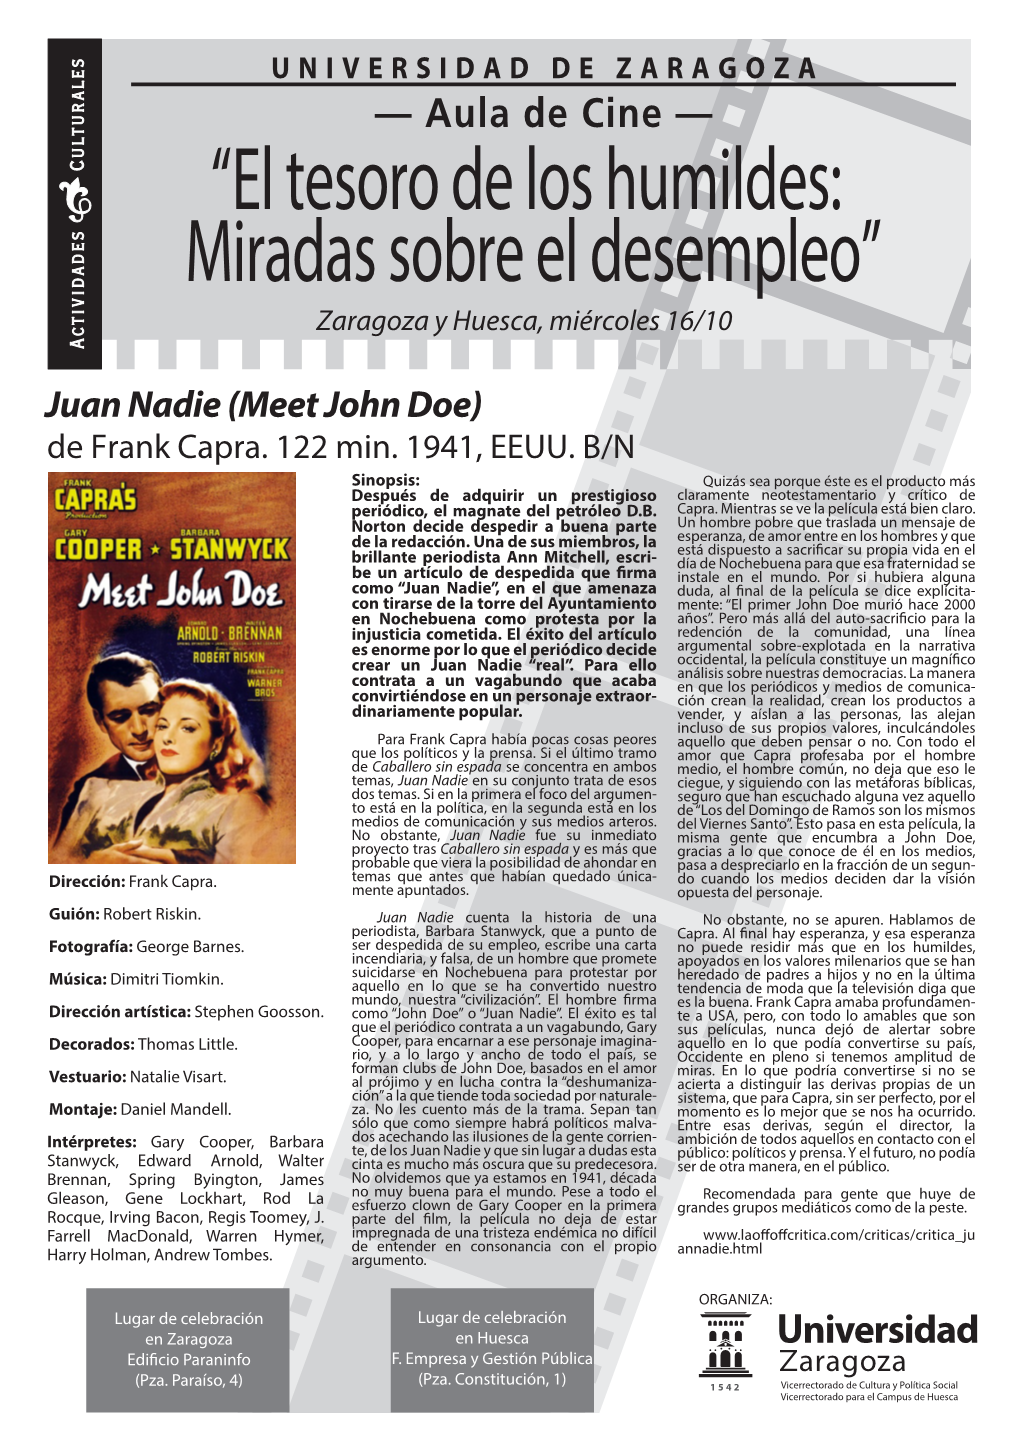 Juan Nadie (Meet John Doe) De Frank Capra